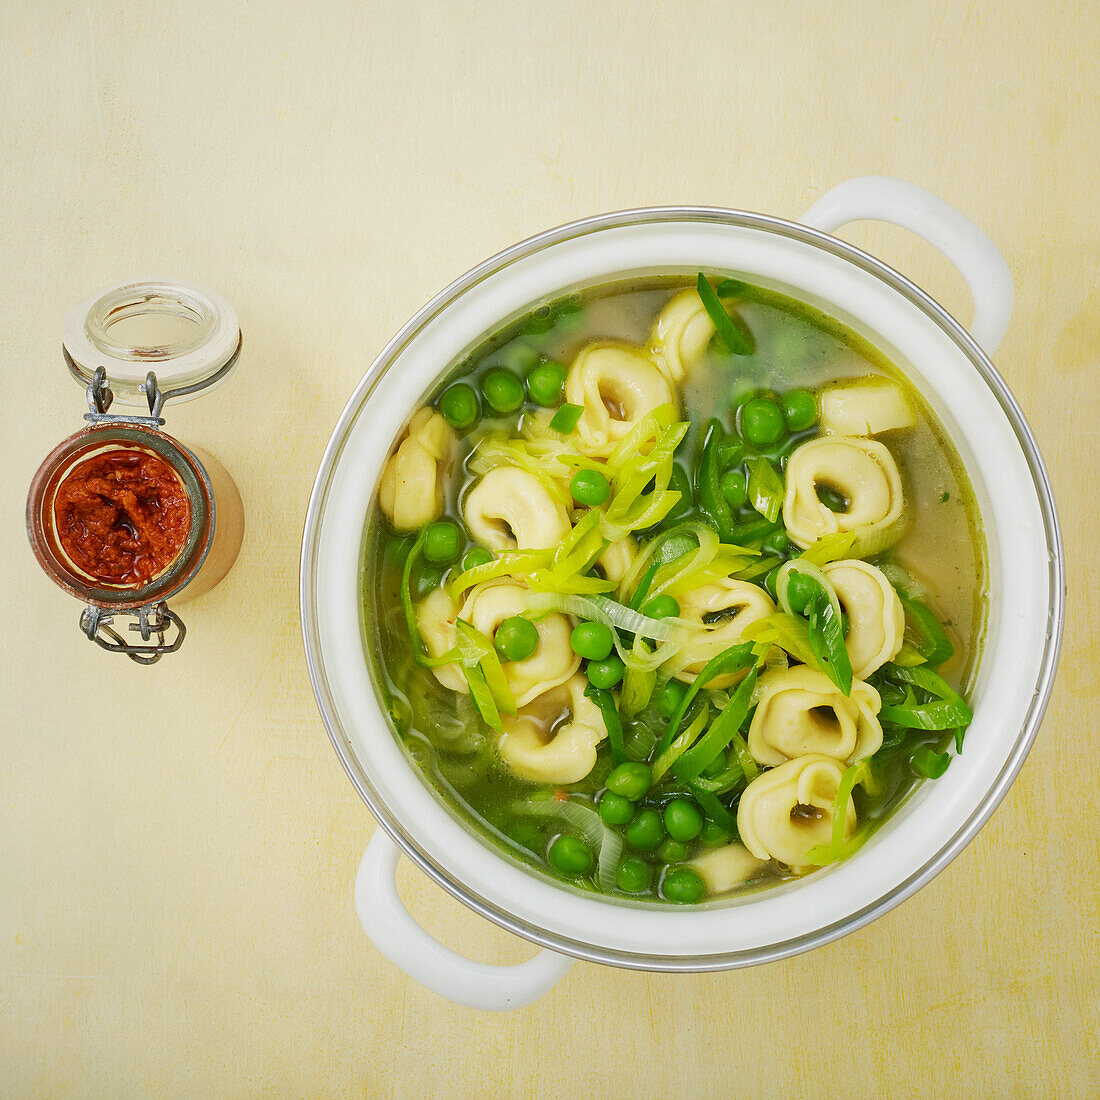 Vegan tortellini soup with peas and leeks